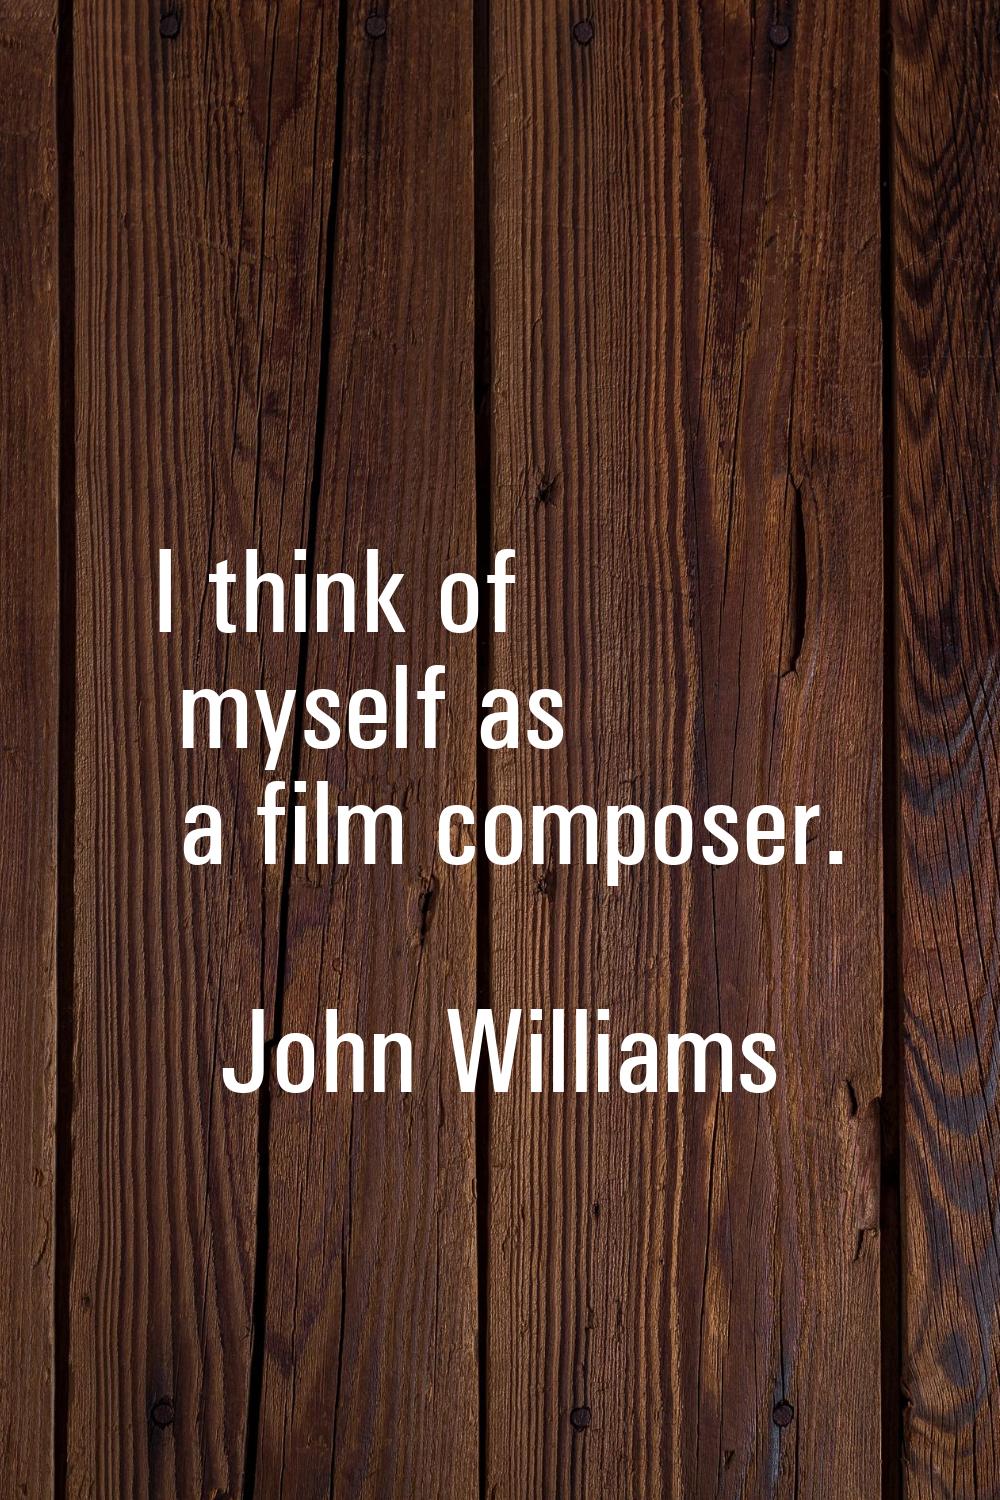 I think of myself as a film composer.